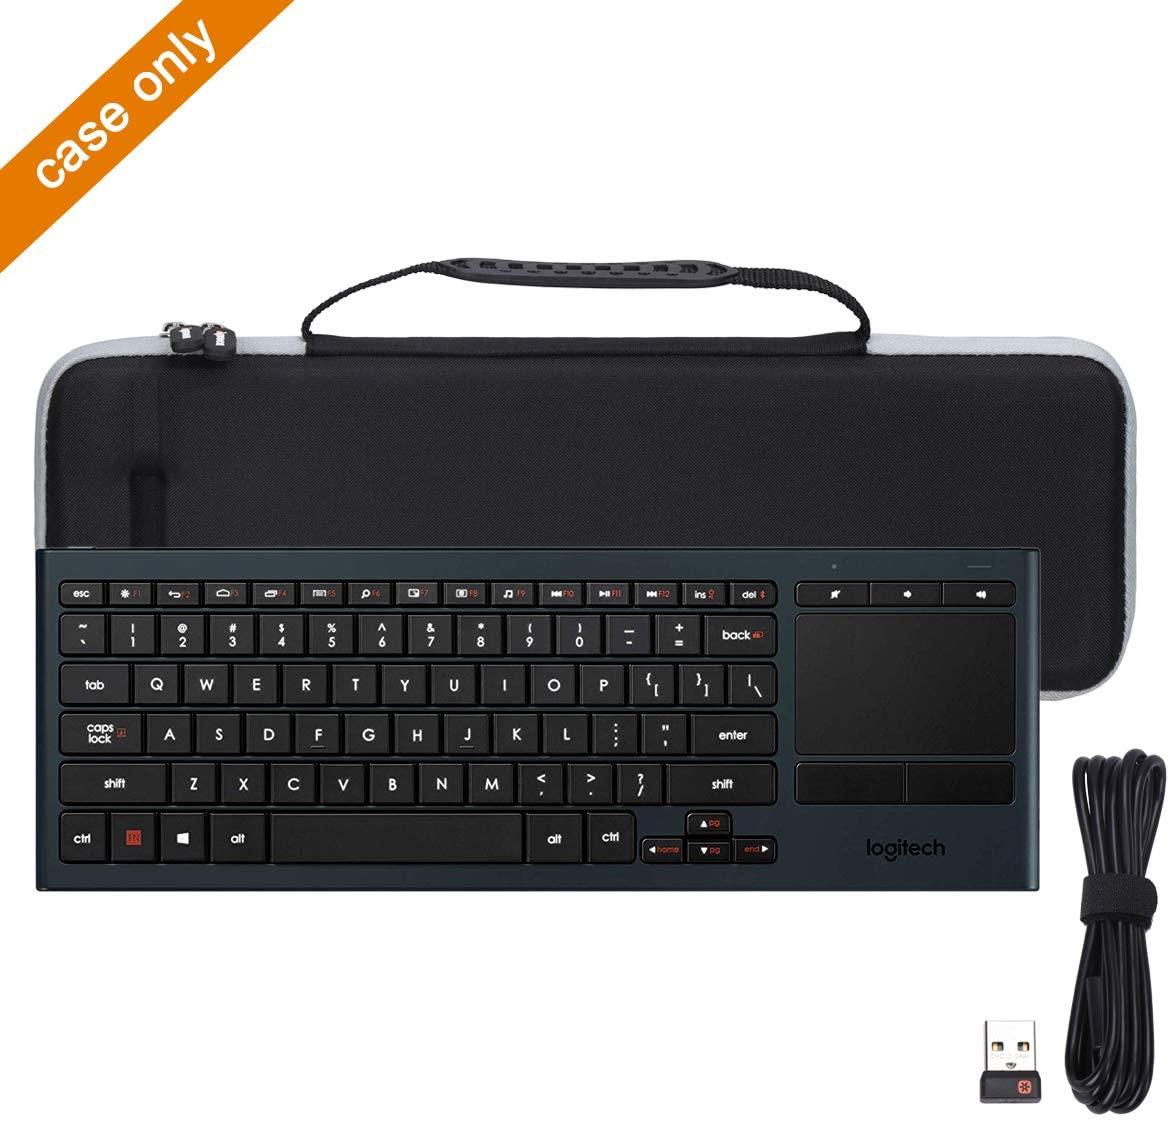 Aproca Hard Carry Travel Case for Logitech K830 Illuminated Living-Room Keyboard